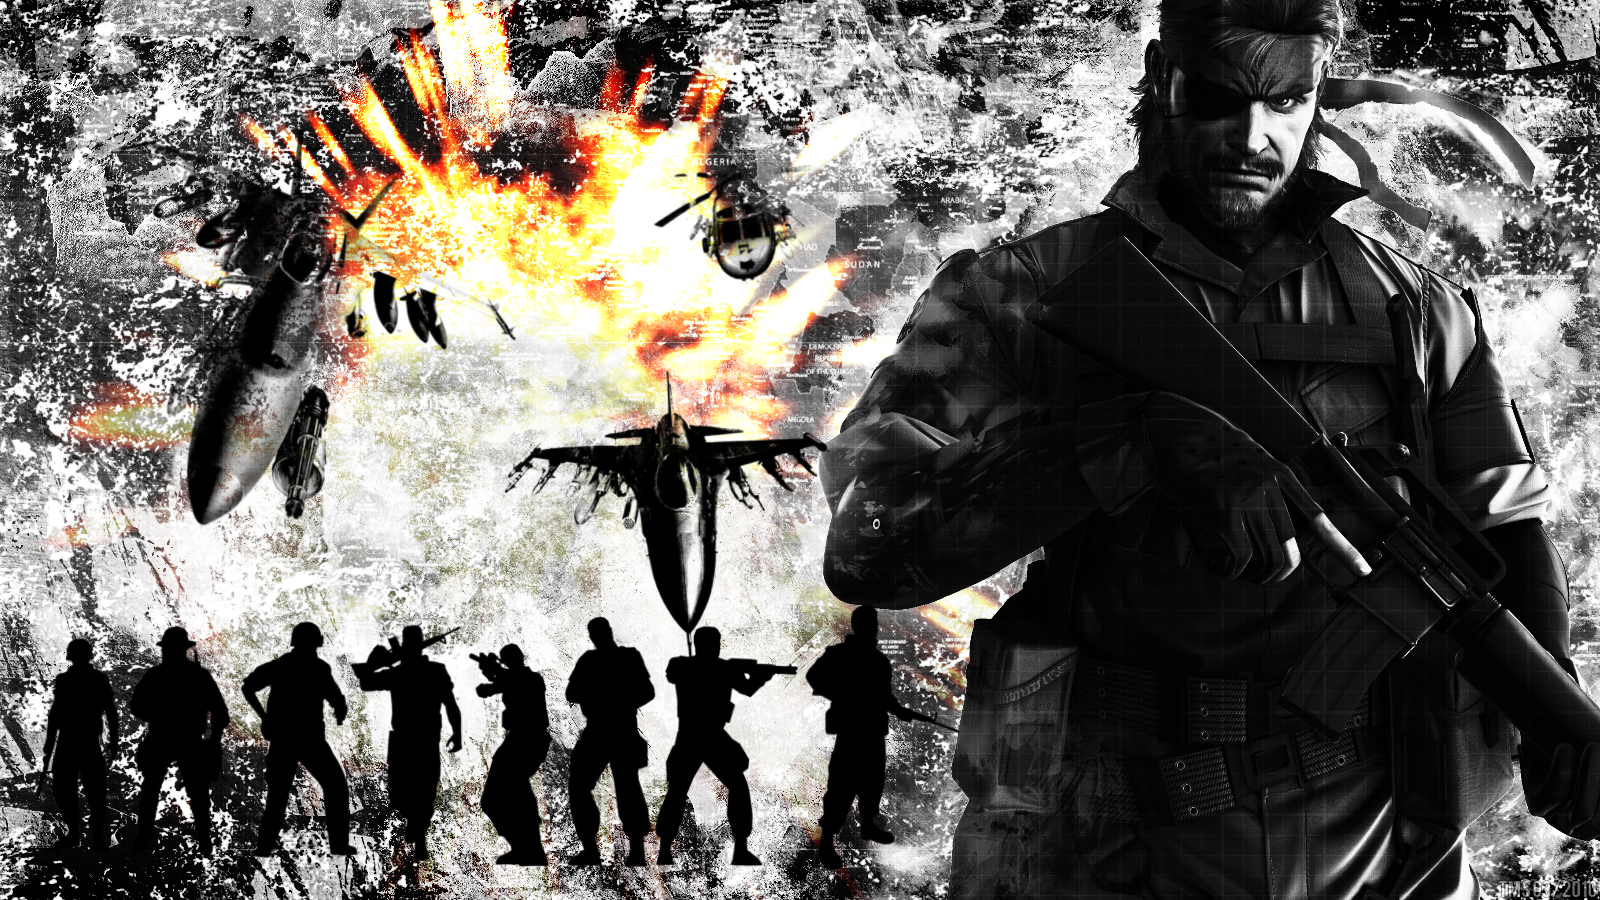 Metal Gear Solid: Peace Walker Backgrounds on Wallpapers Vista